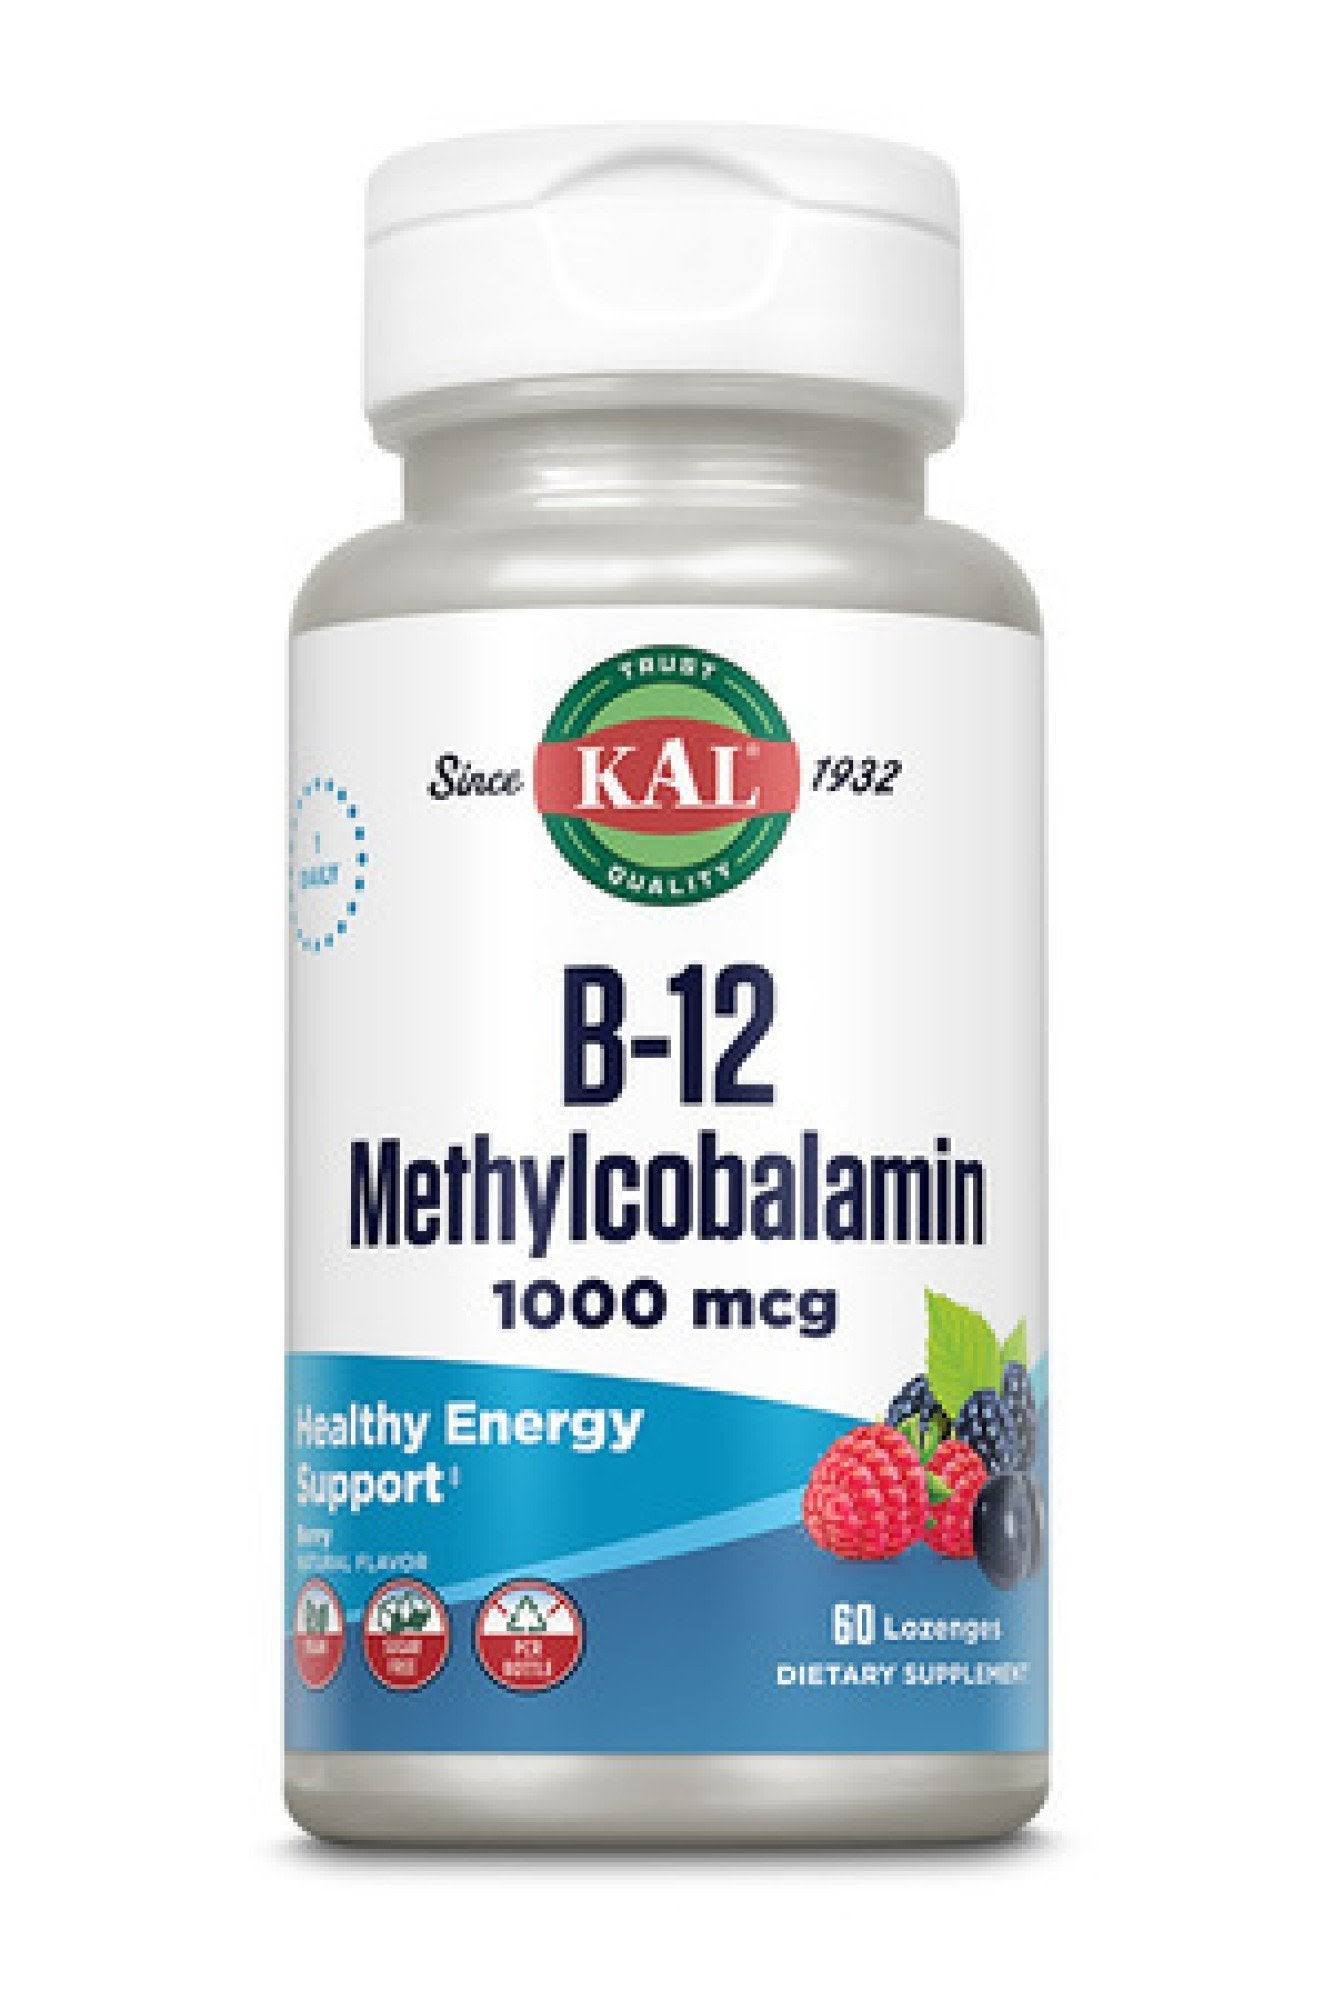 KAL Methylcobalamin Dietary Supplement - Berry, 60 Tablets